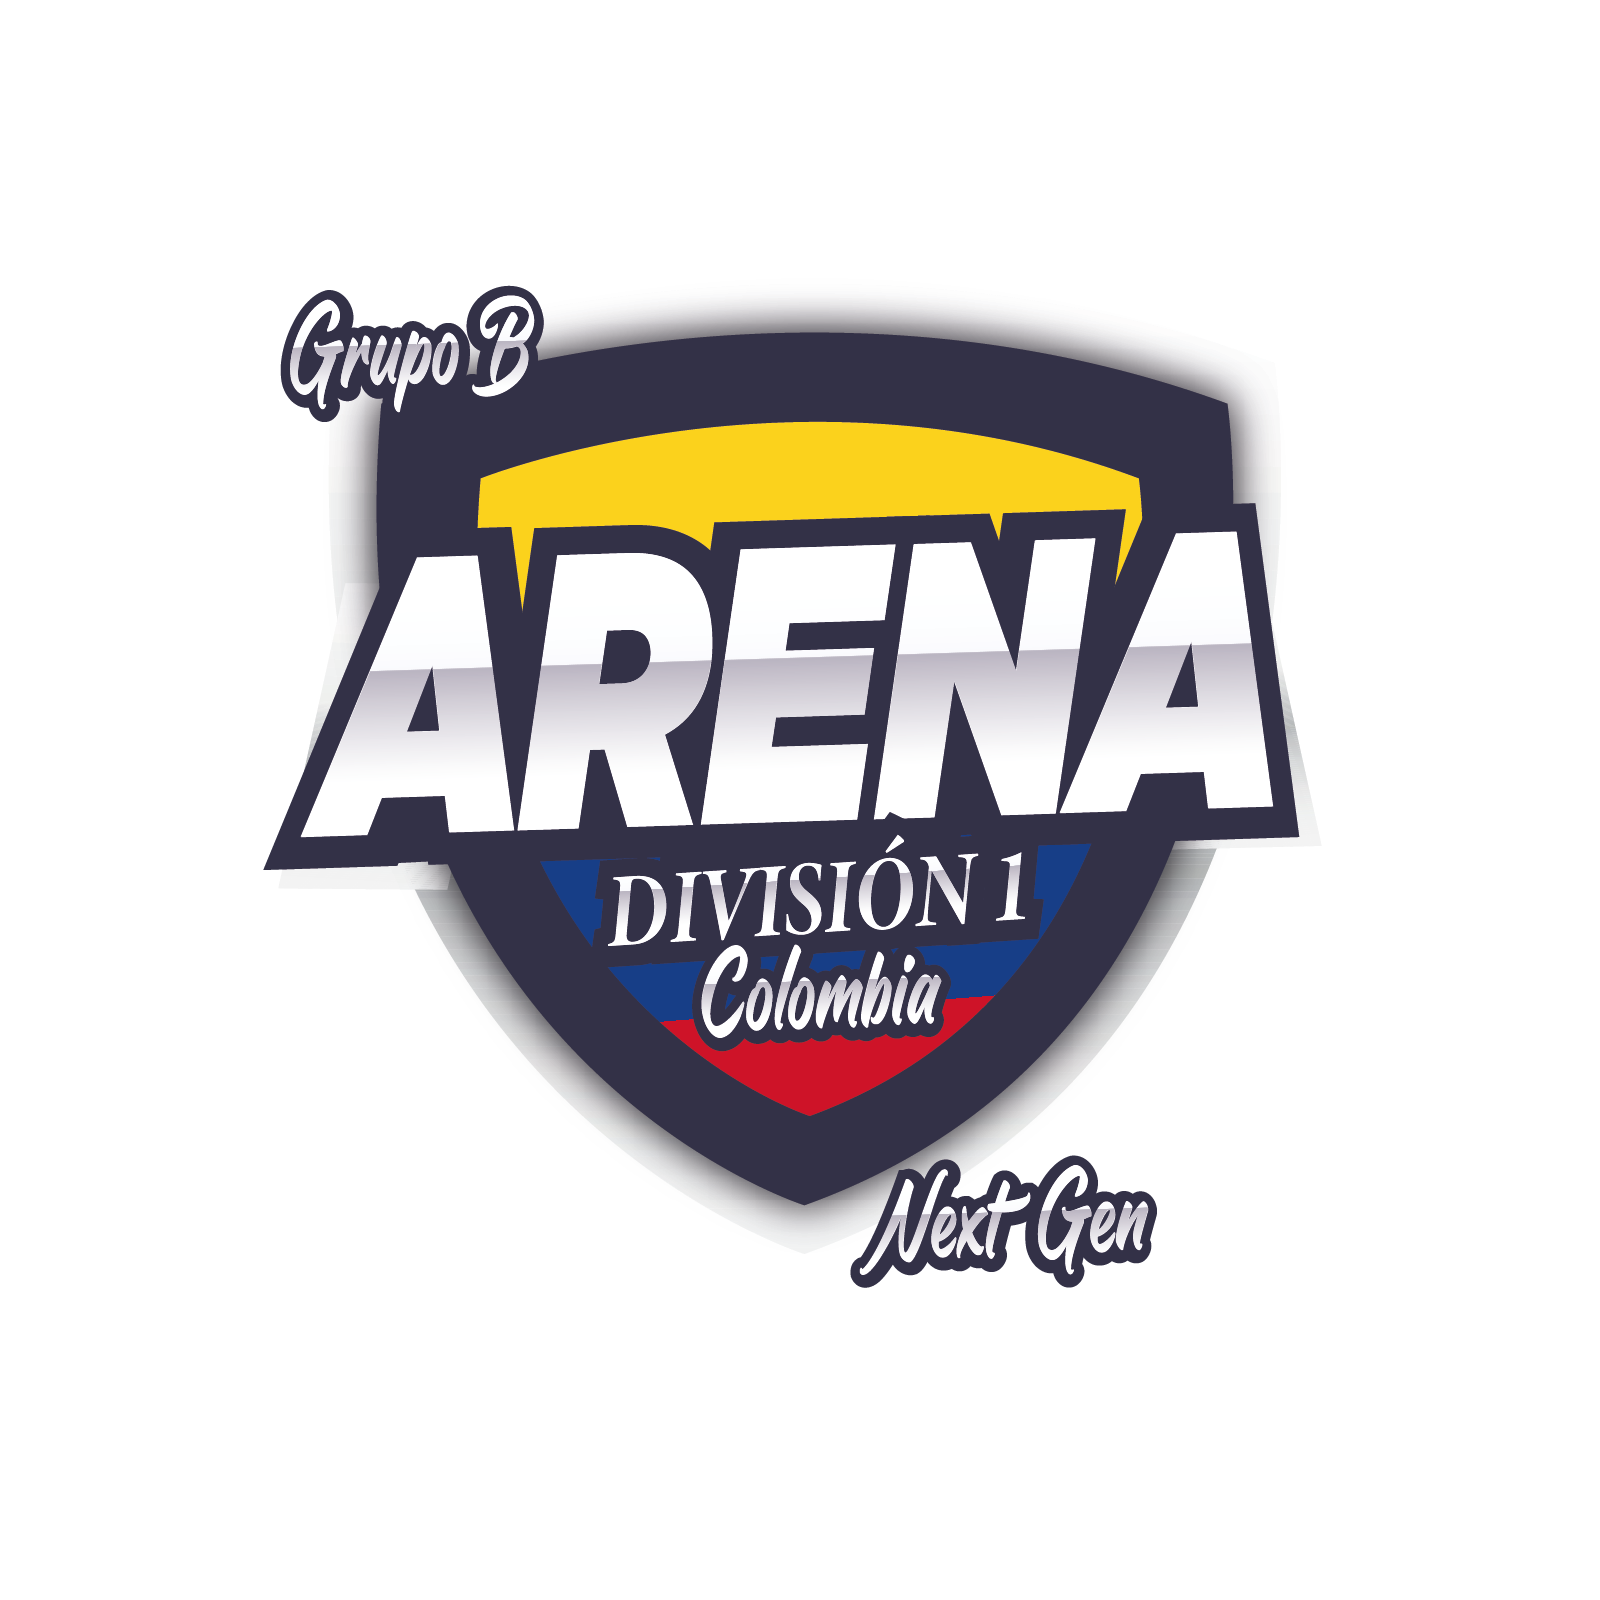 ARENA Colombia D1 Next Gen Grupo B